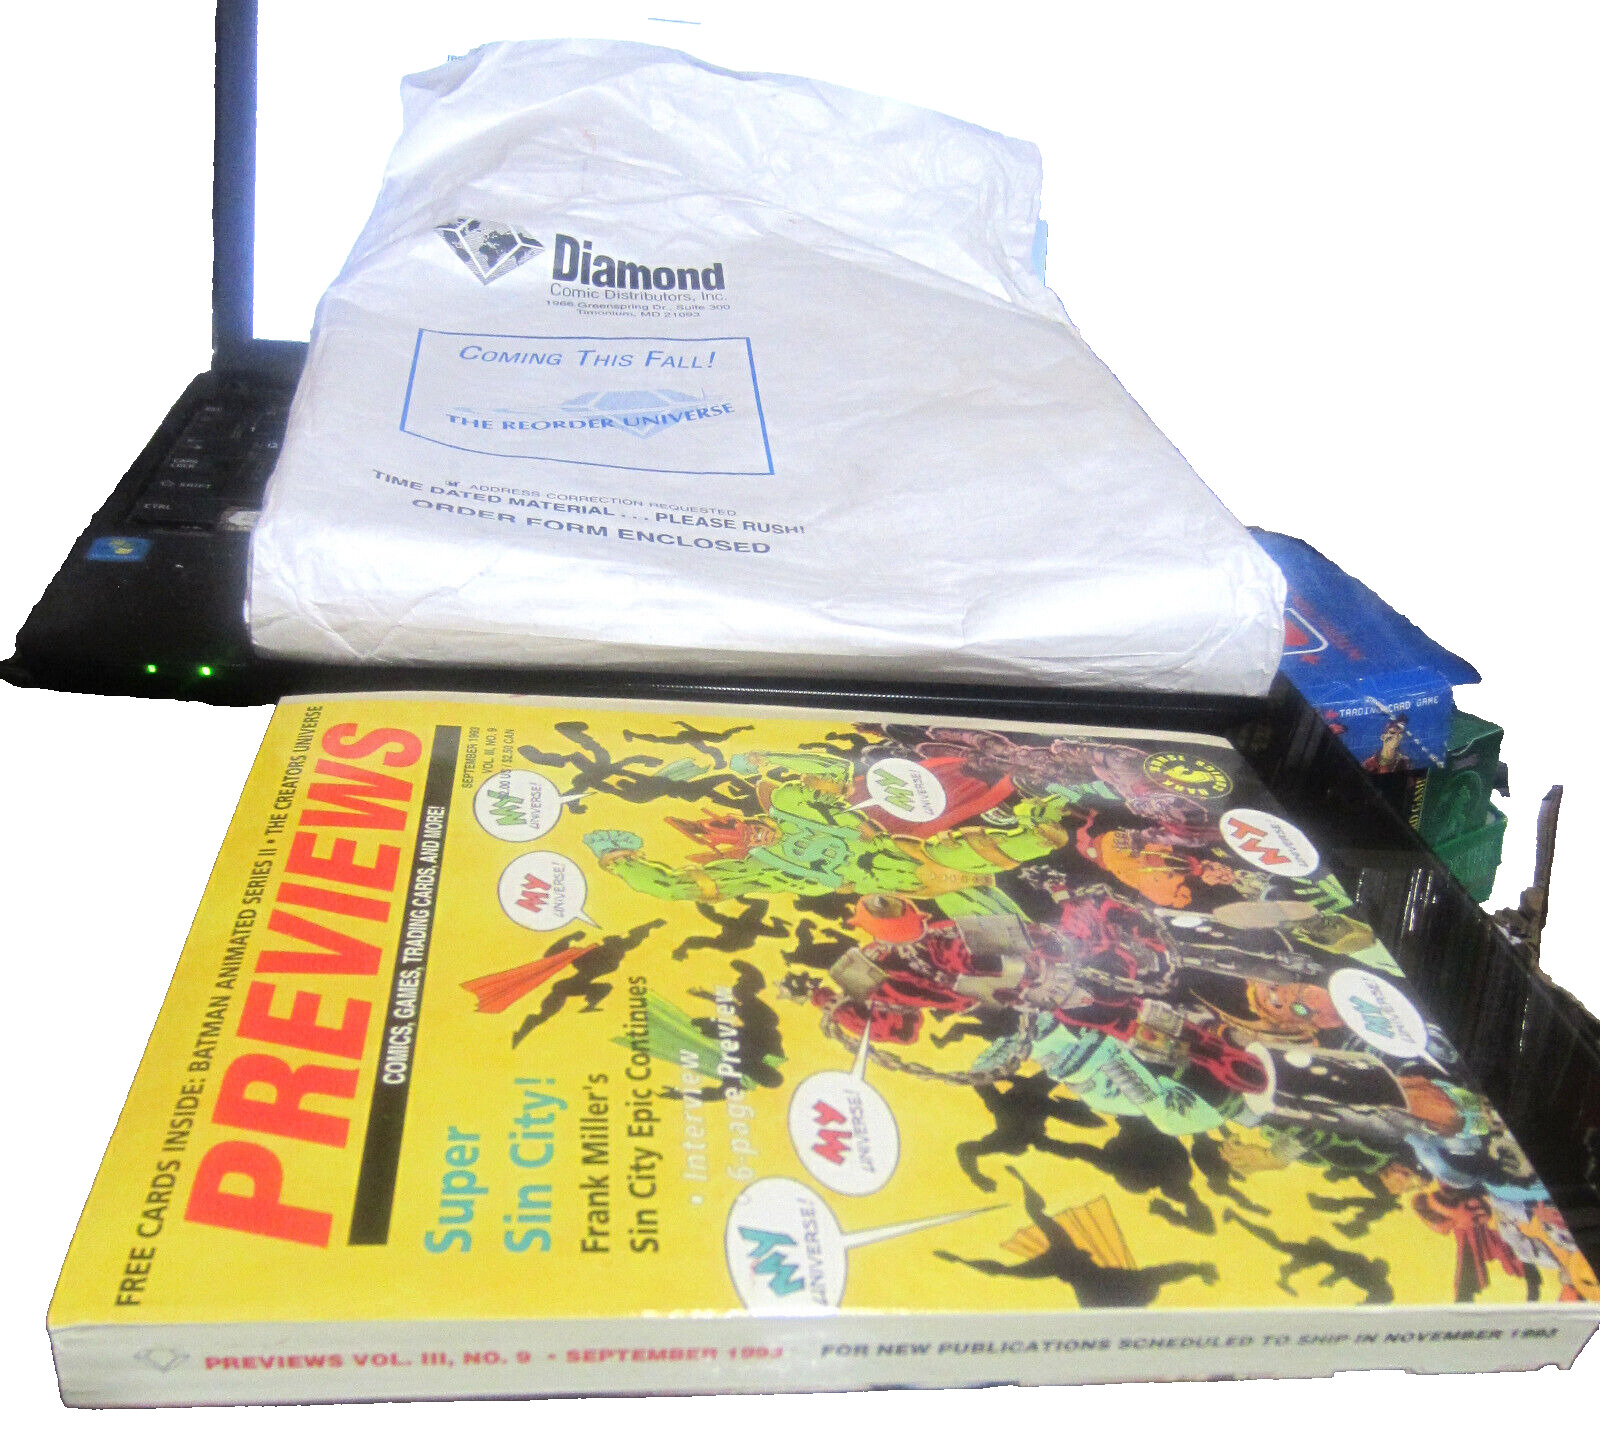 Very Rare Previews Vol. 3 #9 September 1993.Diamond Comics COMPLETE Order Pack